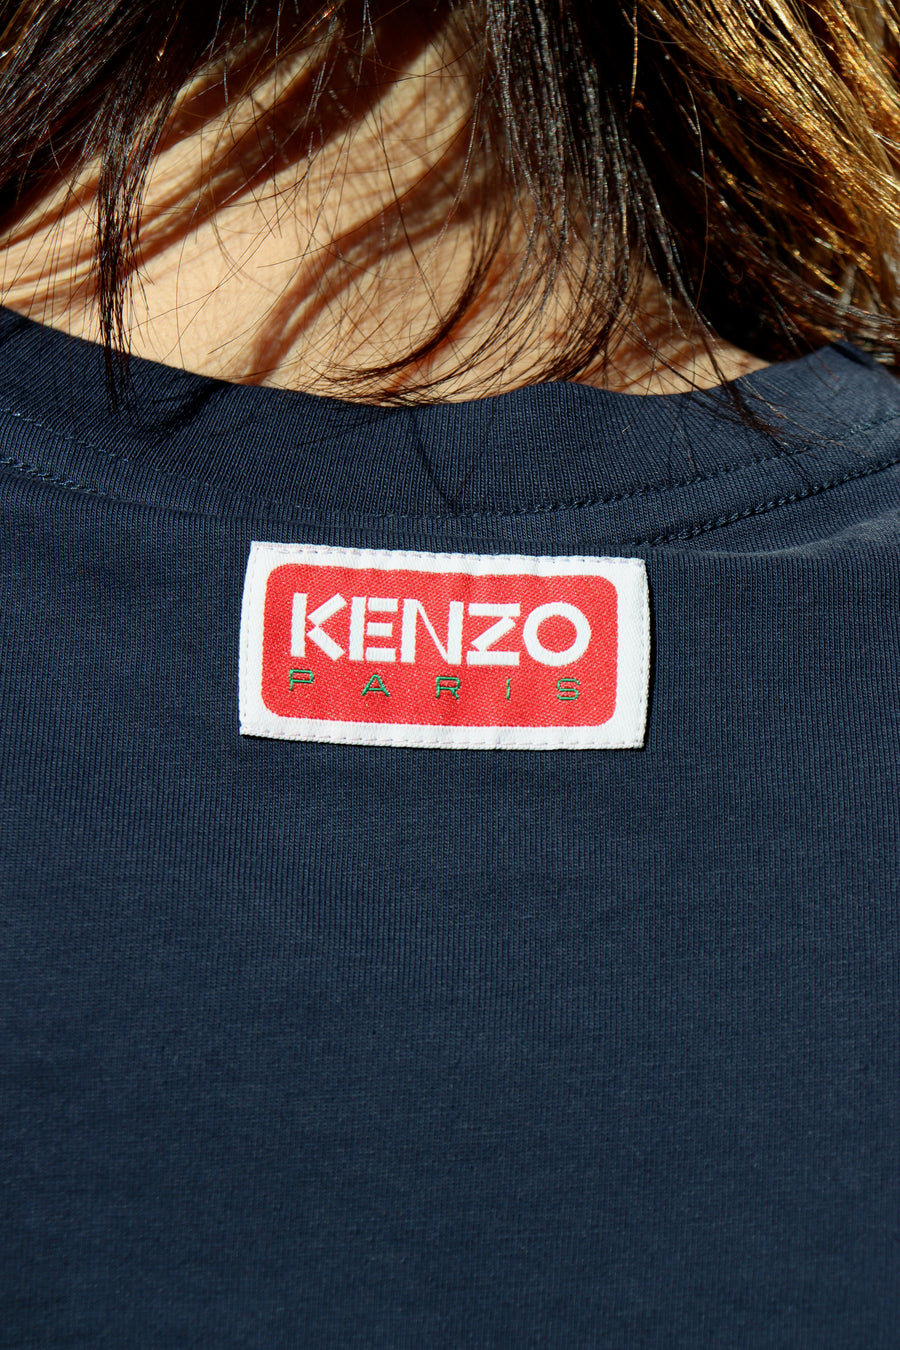 KENZO  BOKE FLOWER CLASSIC T-SHIRT-2(MID.BLUE)